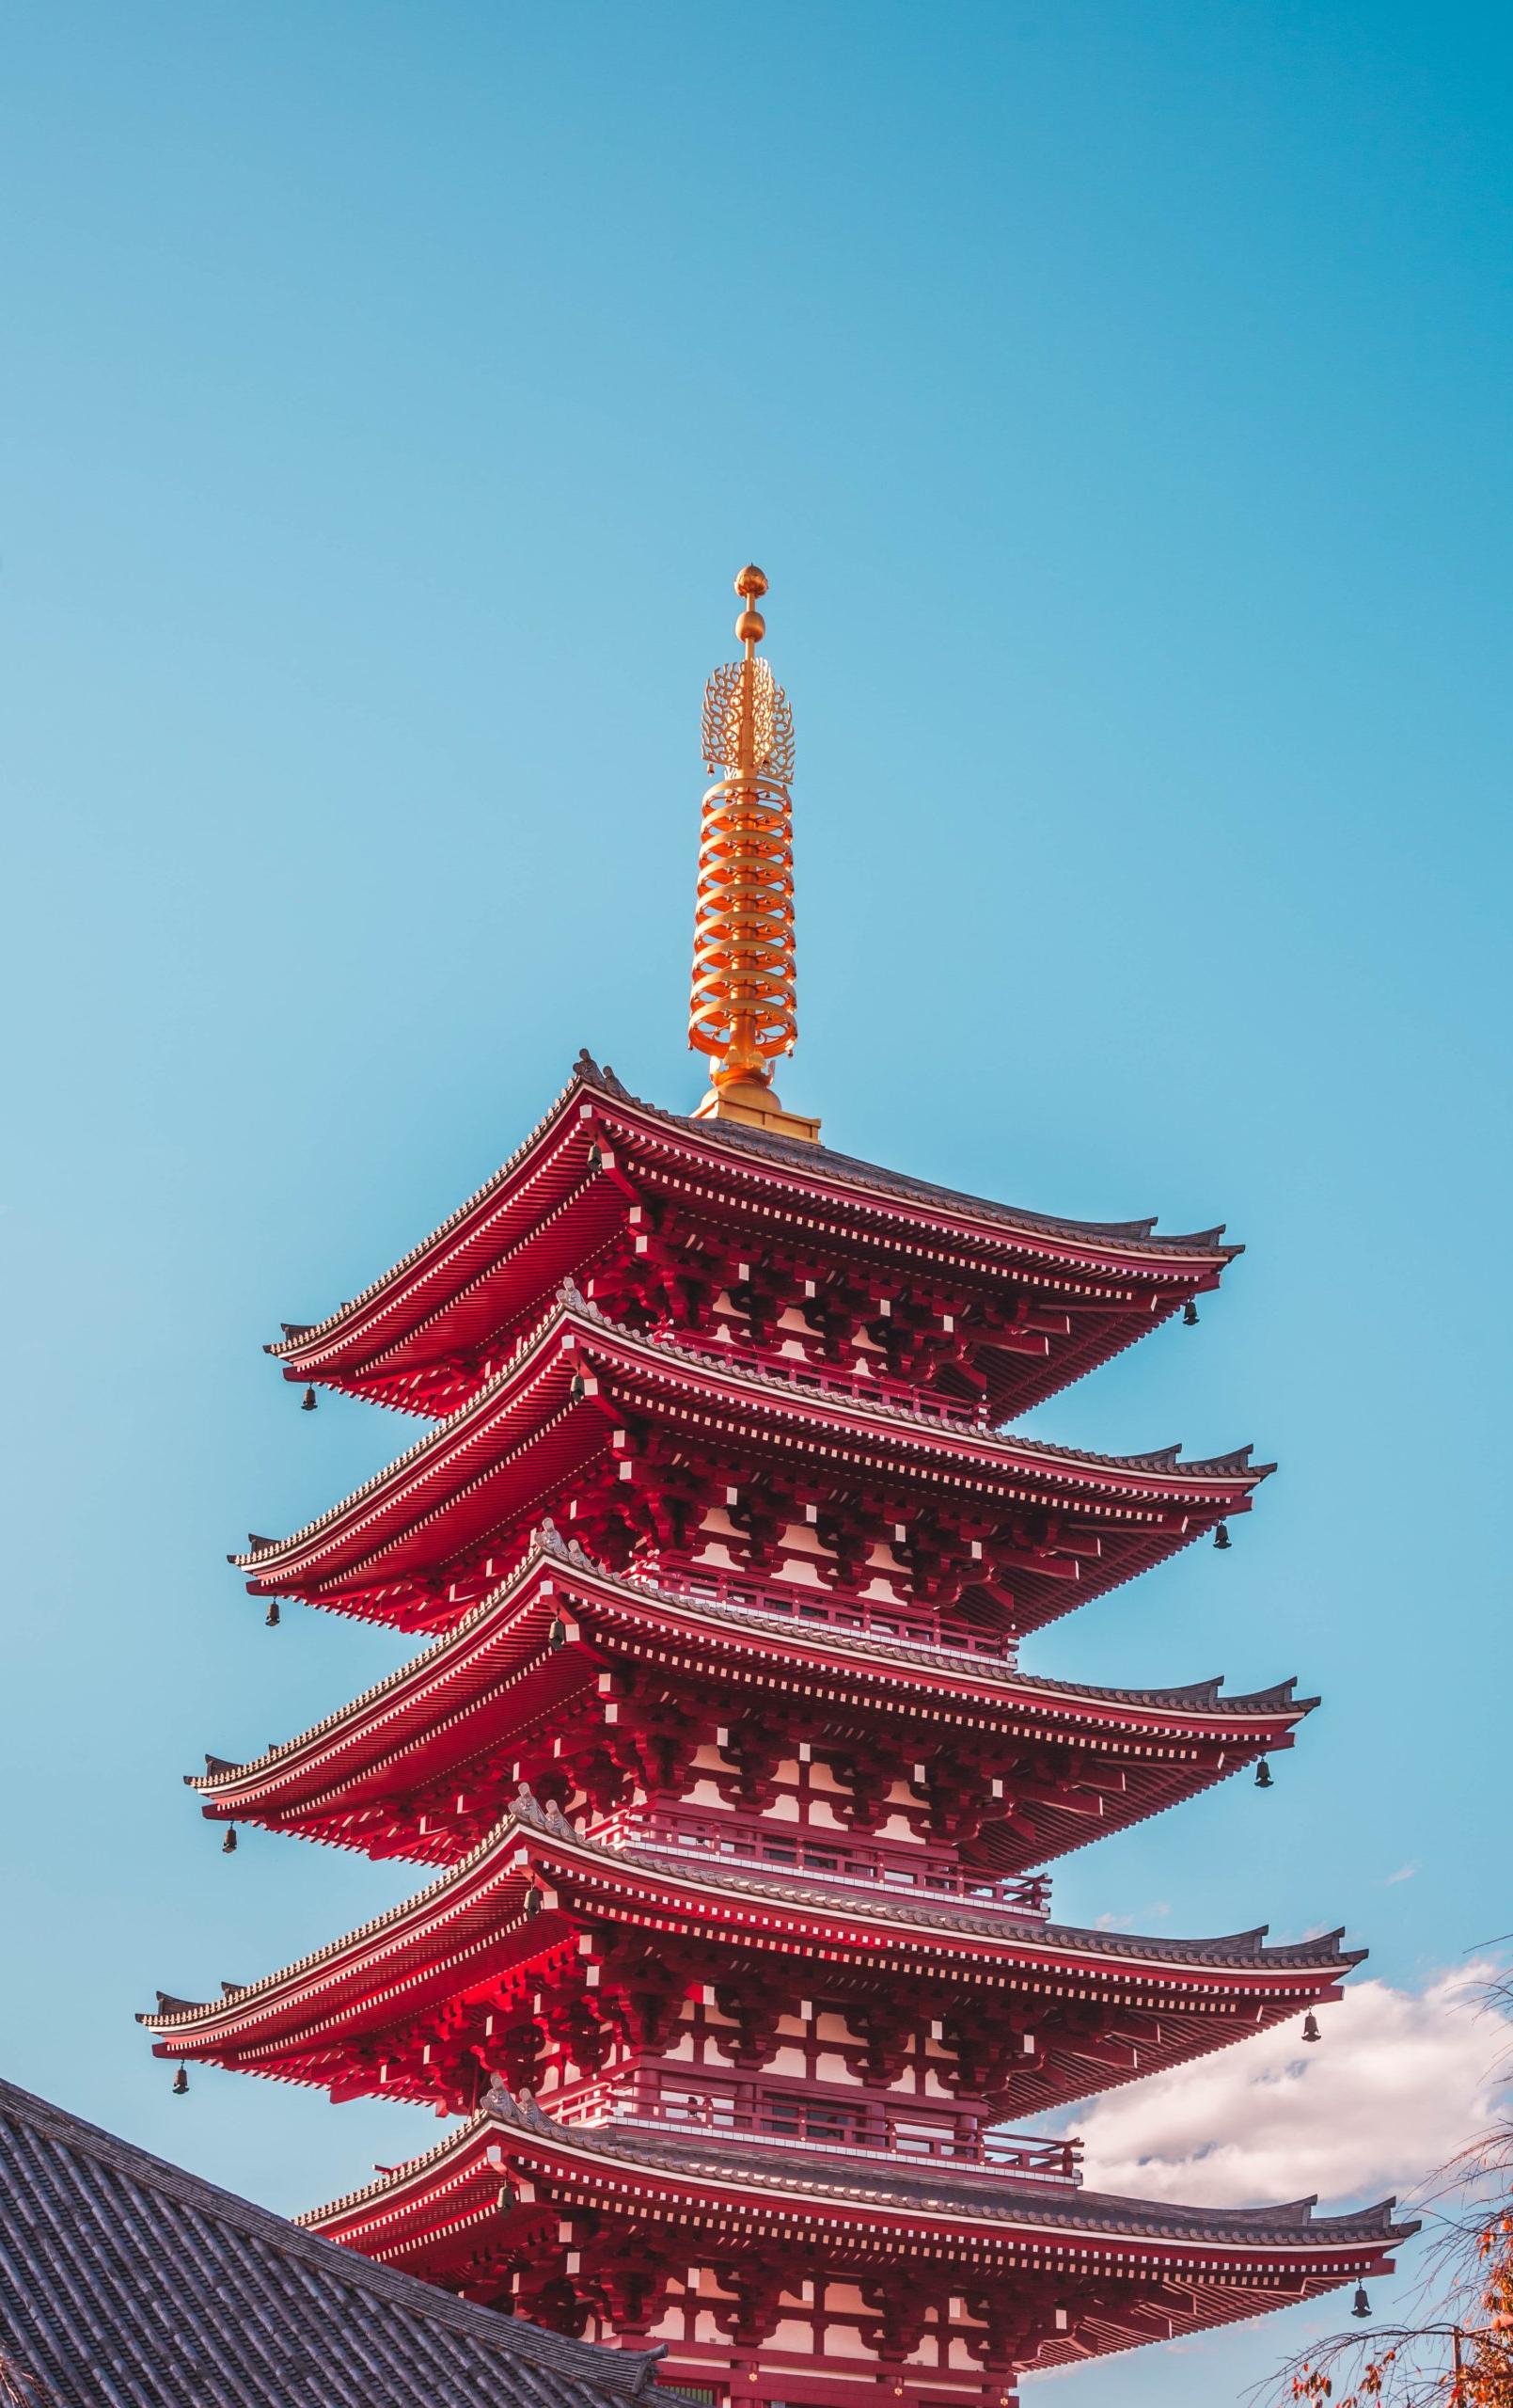 Photo of a Japanese pagoda